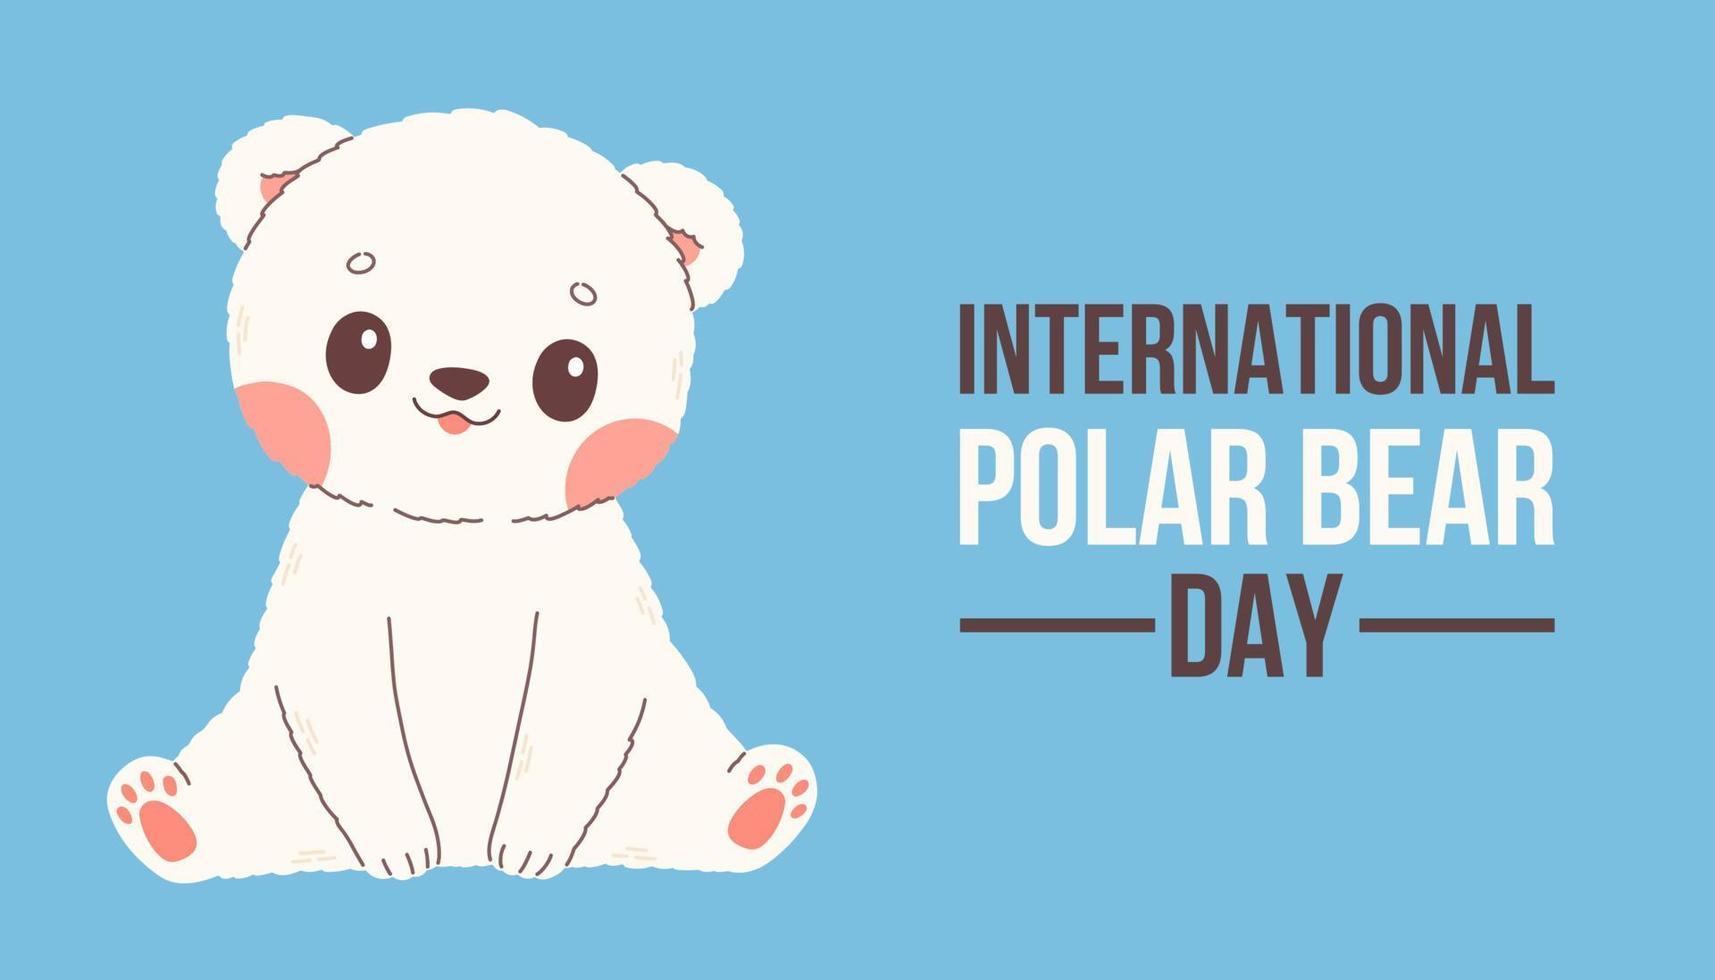 Internationale polair beer dag vector poster, banier, afdrukken ontwerp of groet kaart met schattig tekenfilm baby polair beer